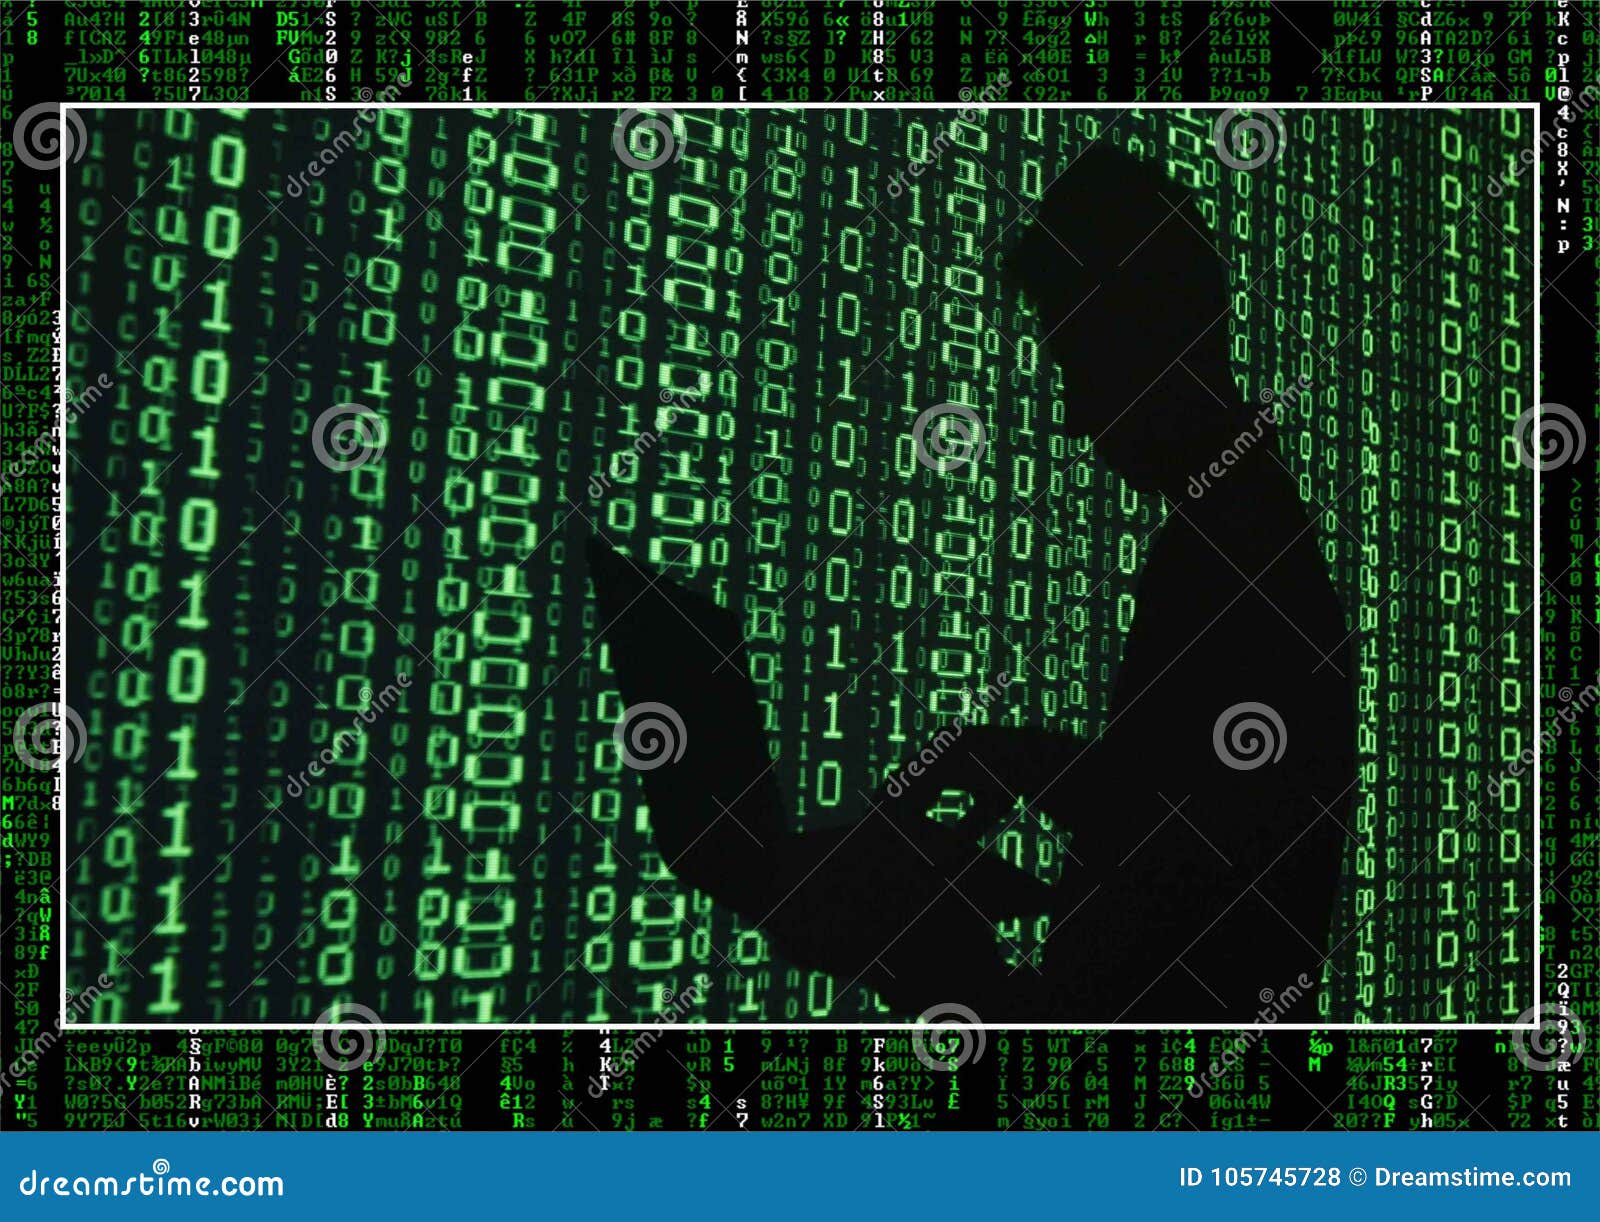 Download The World of Hackers Wallpaper  Wallpaperscom